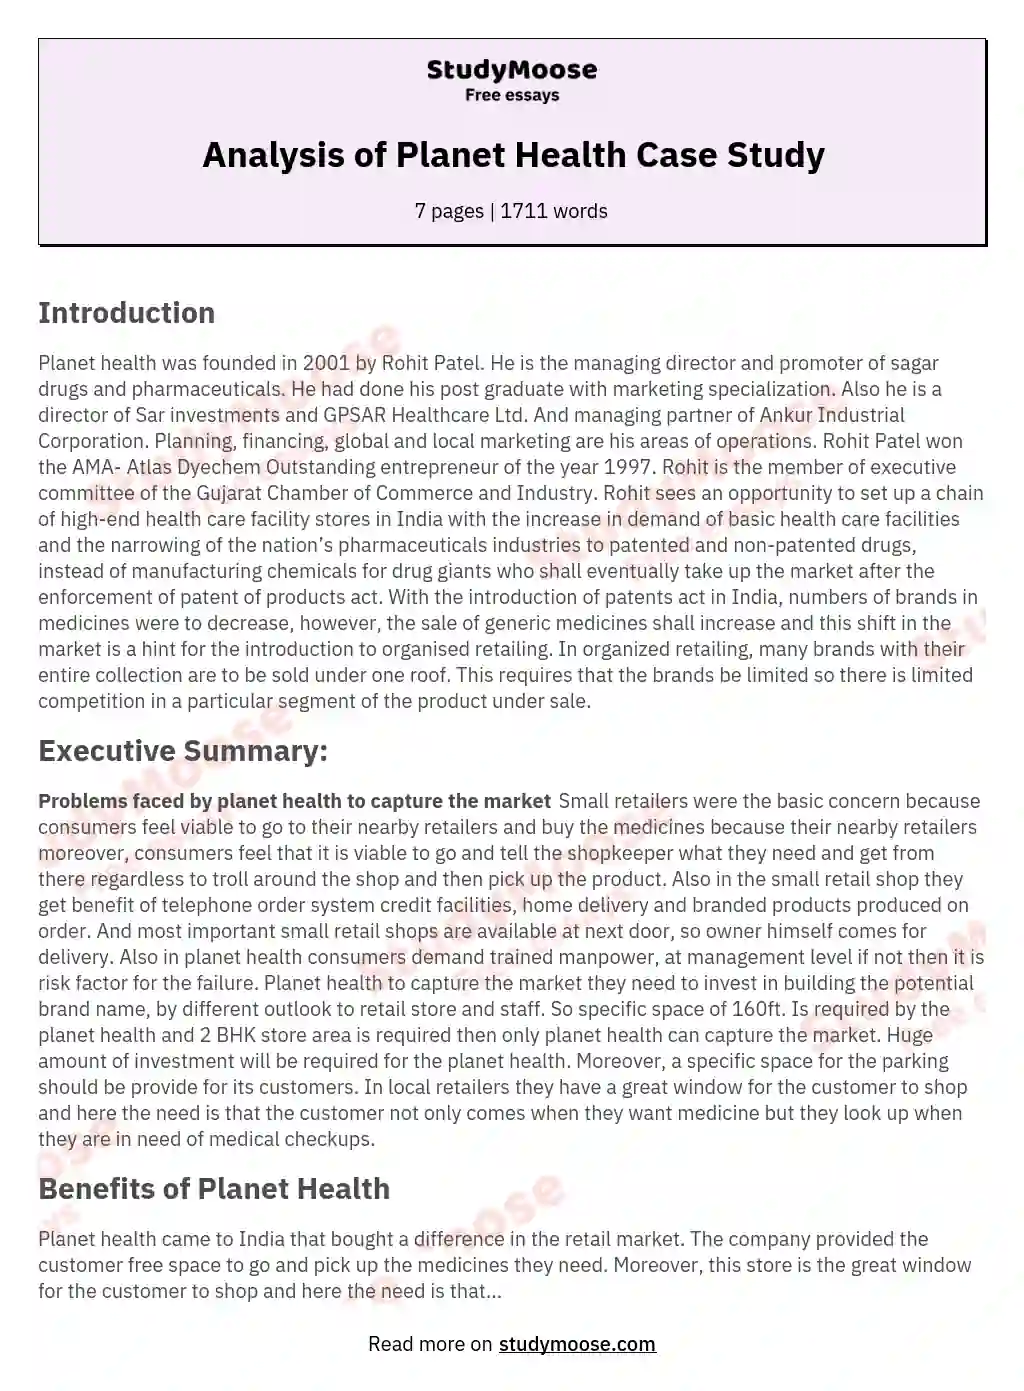 Analysis of Planet Health Case Study essay